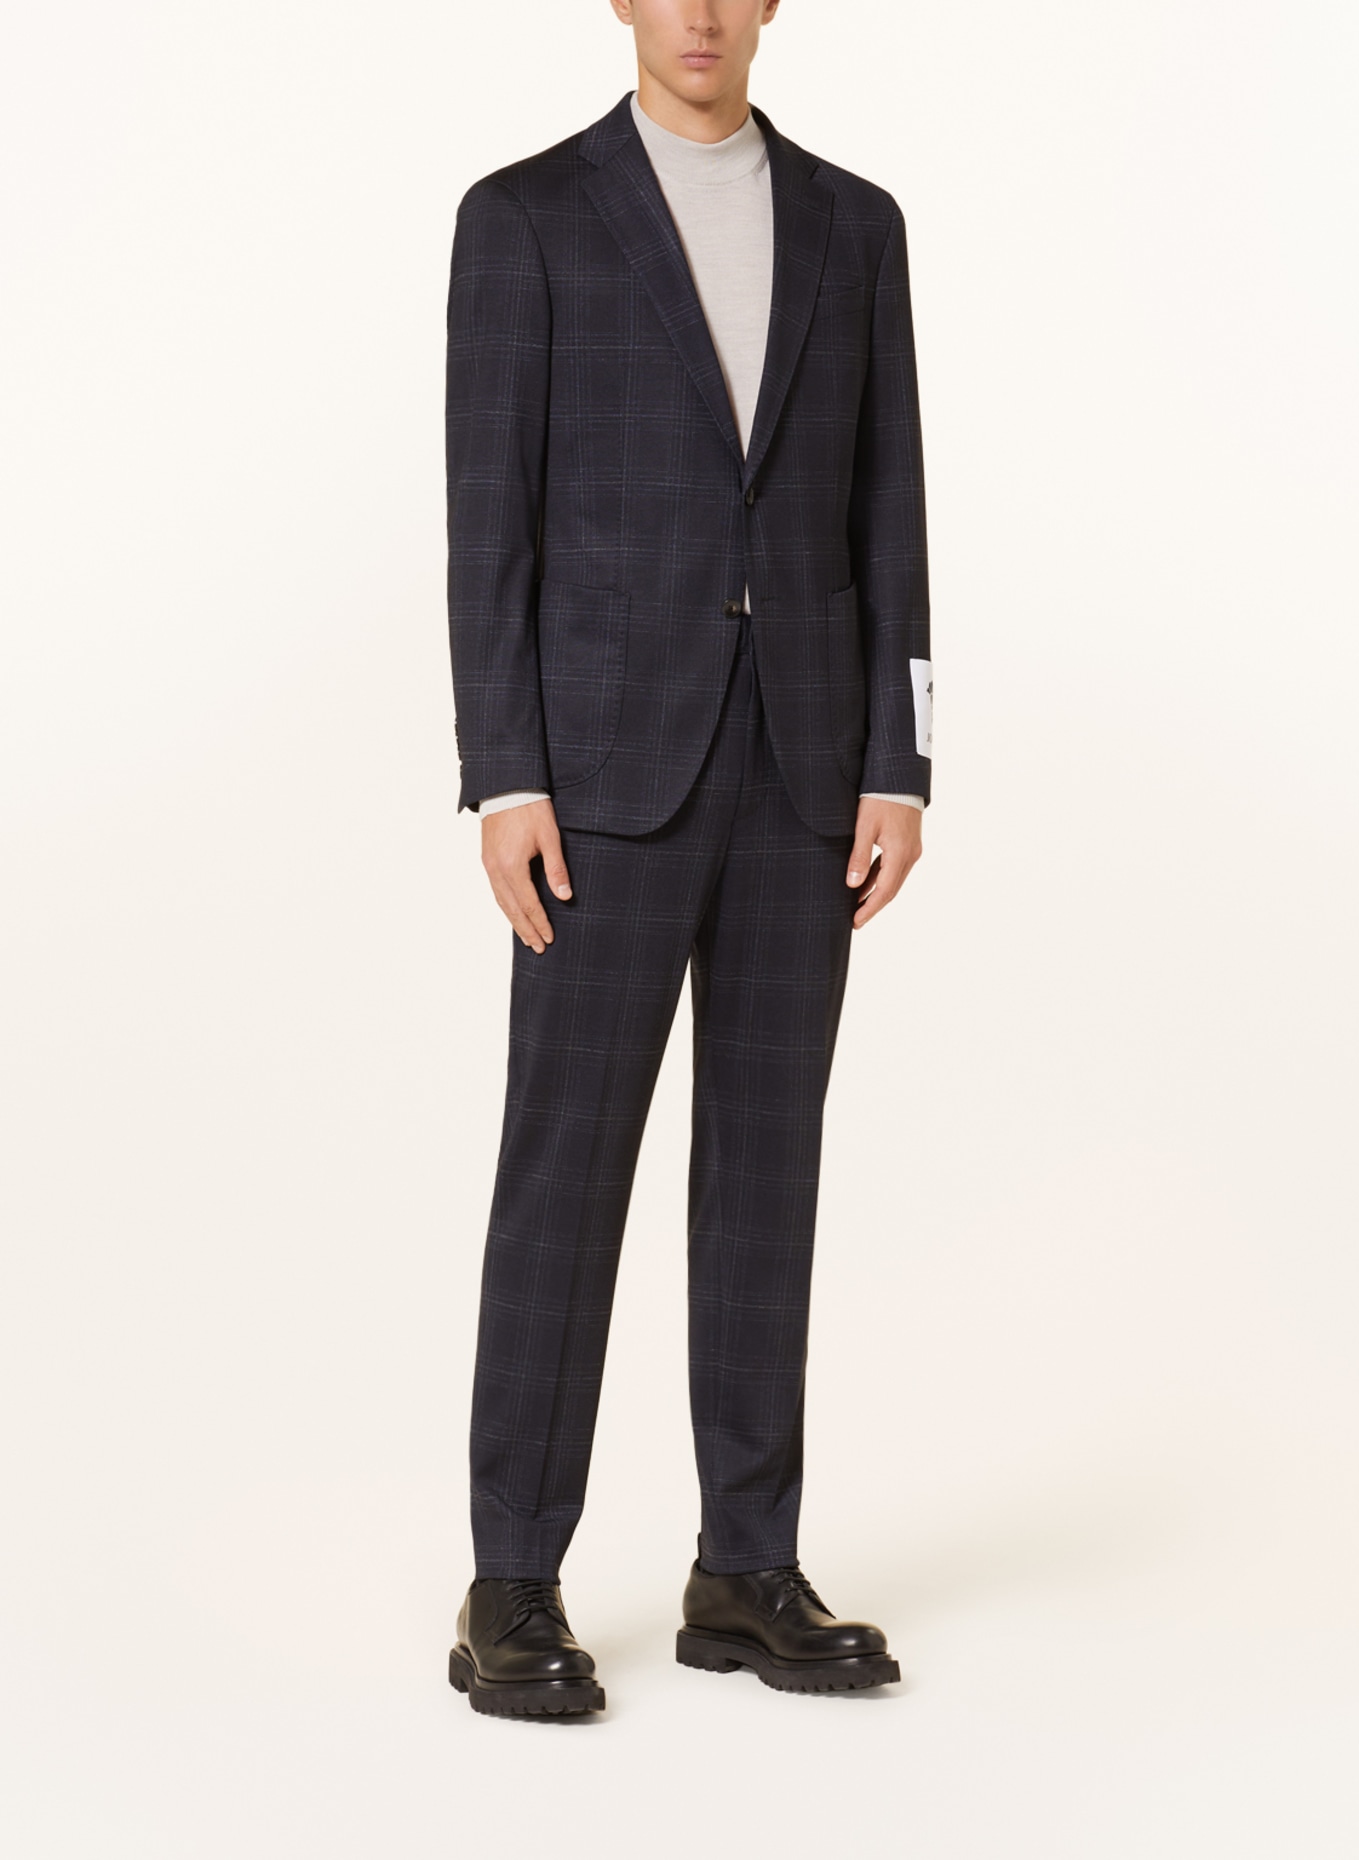 JOOP! Suit trousers BAXX slim fit in jersey, Color: 405 Dark Blue                  405 (Image 2)